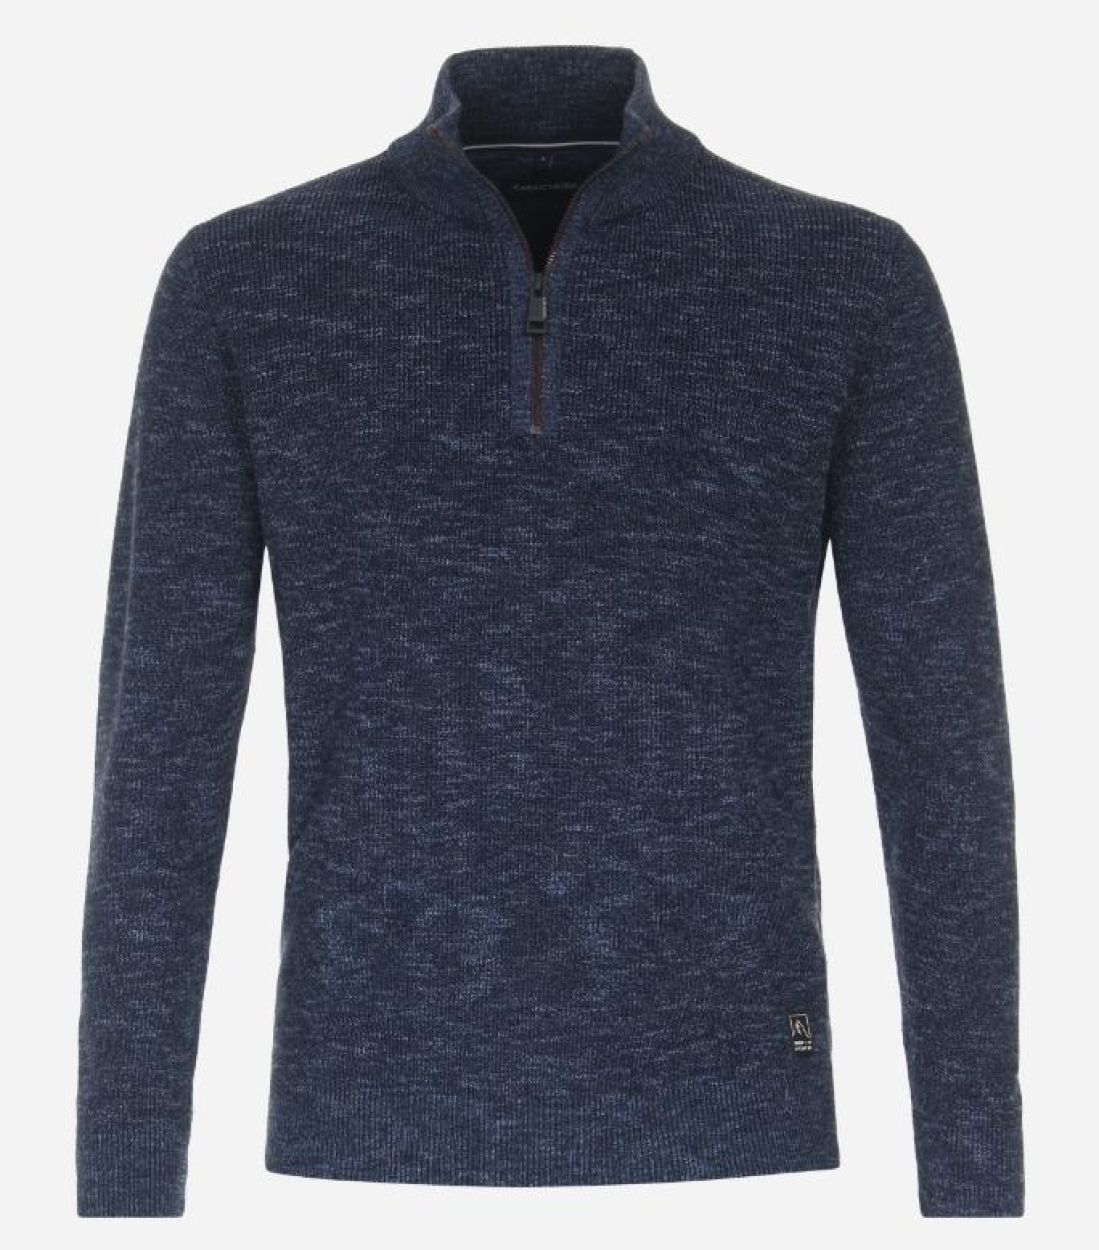 Casa Moda pullover troyer plain (434105100/147 blau) - WeekendMode